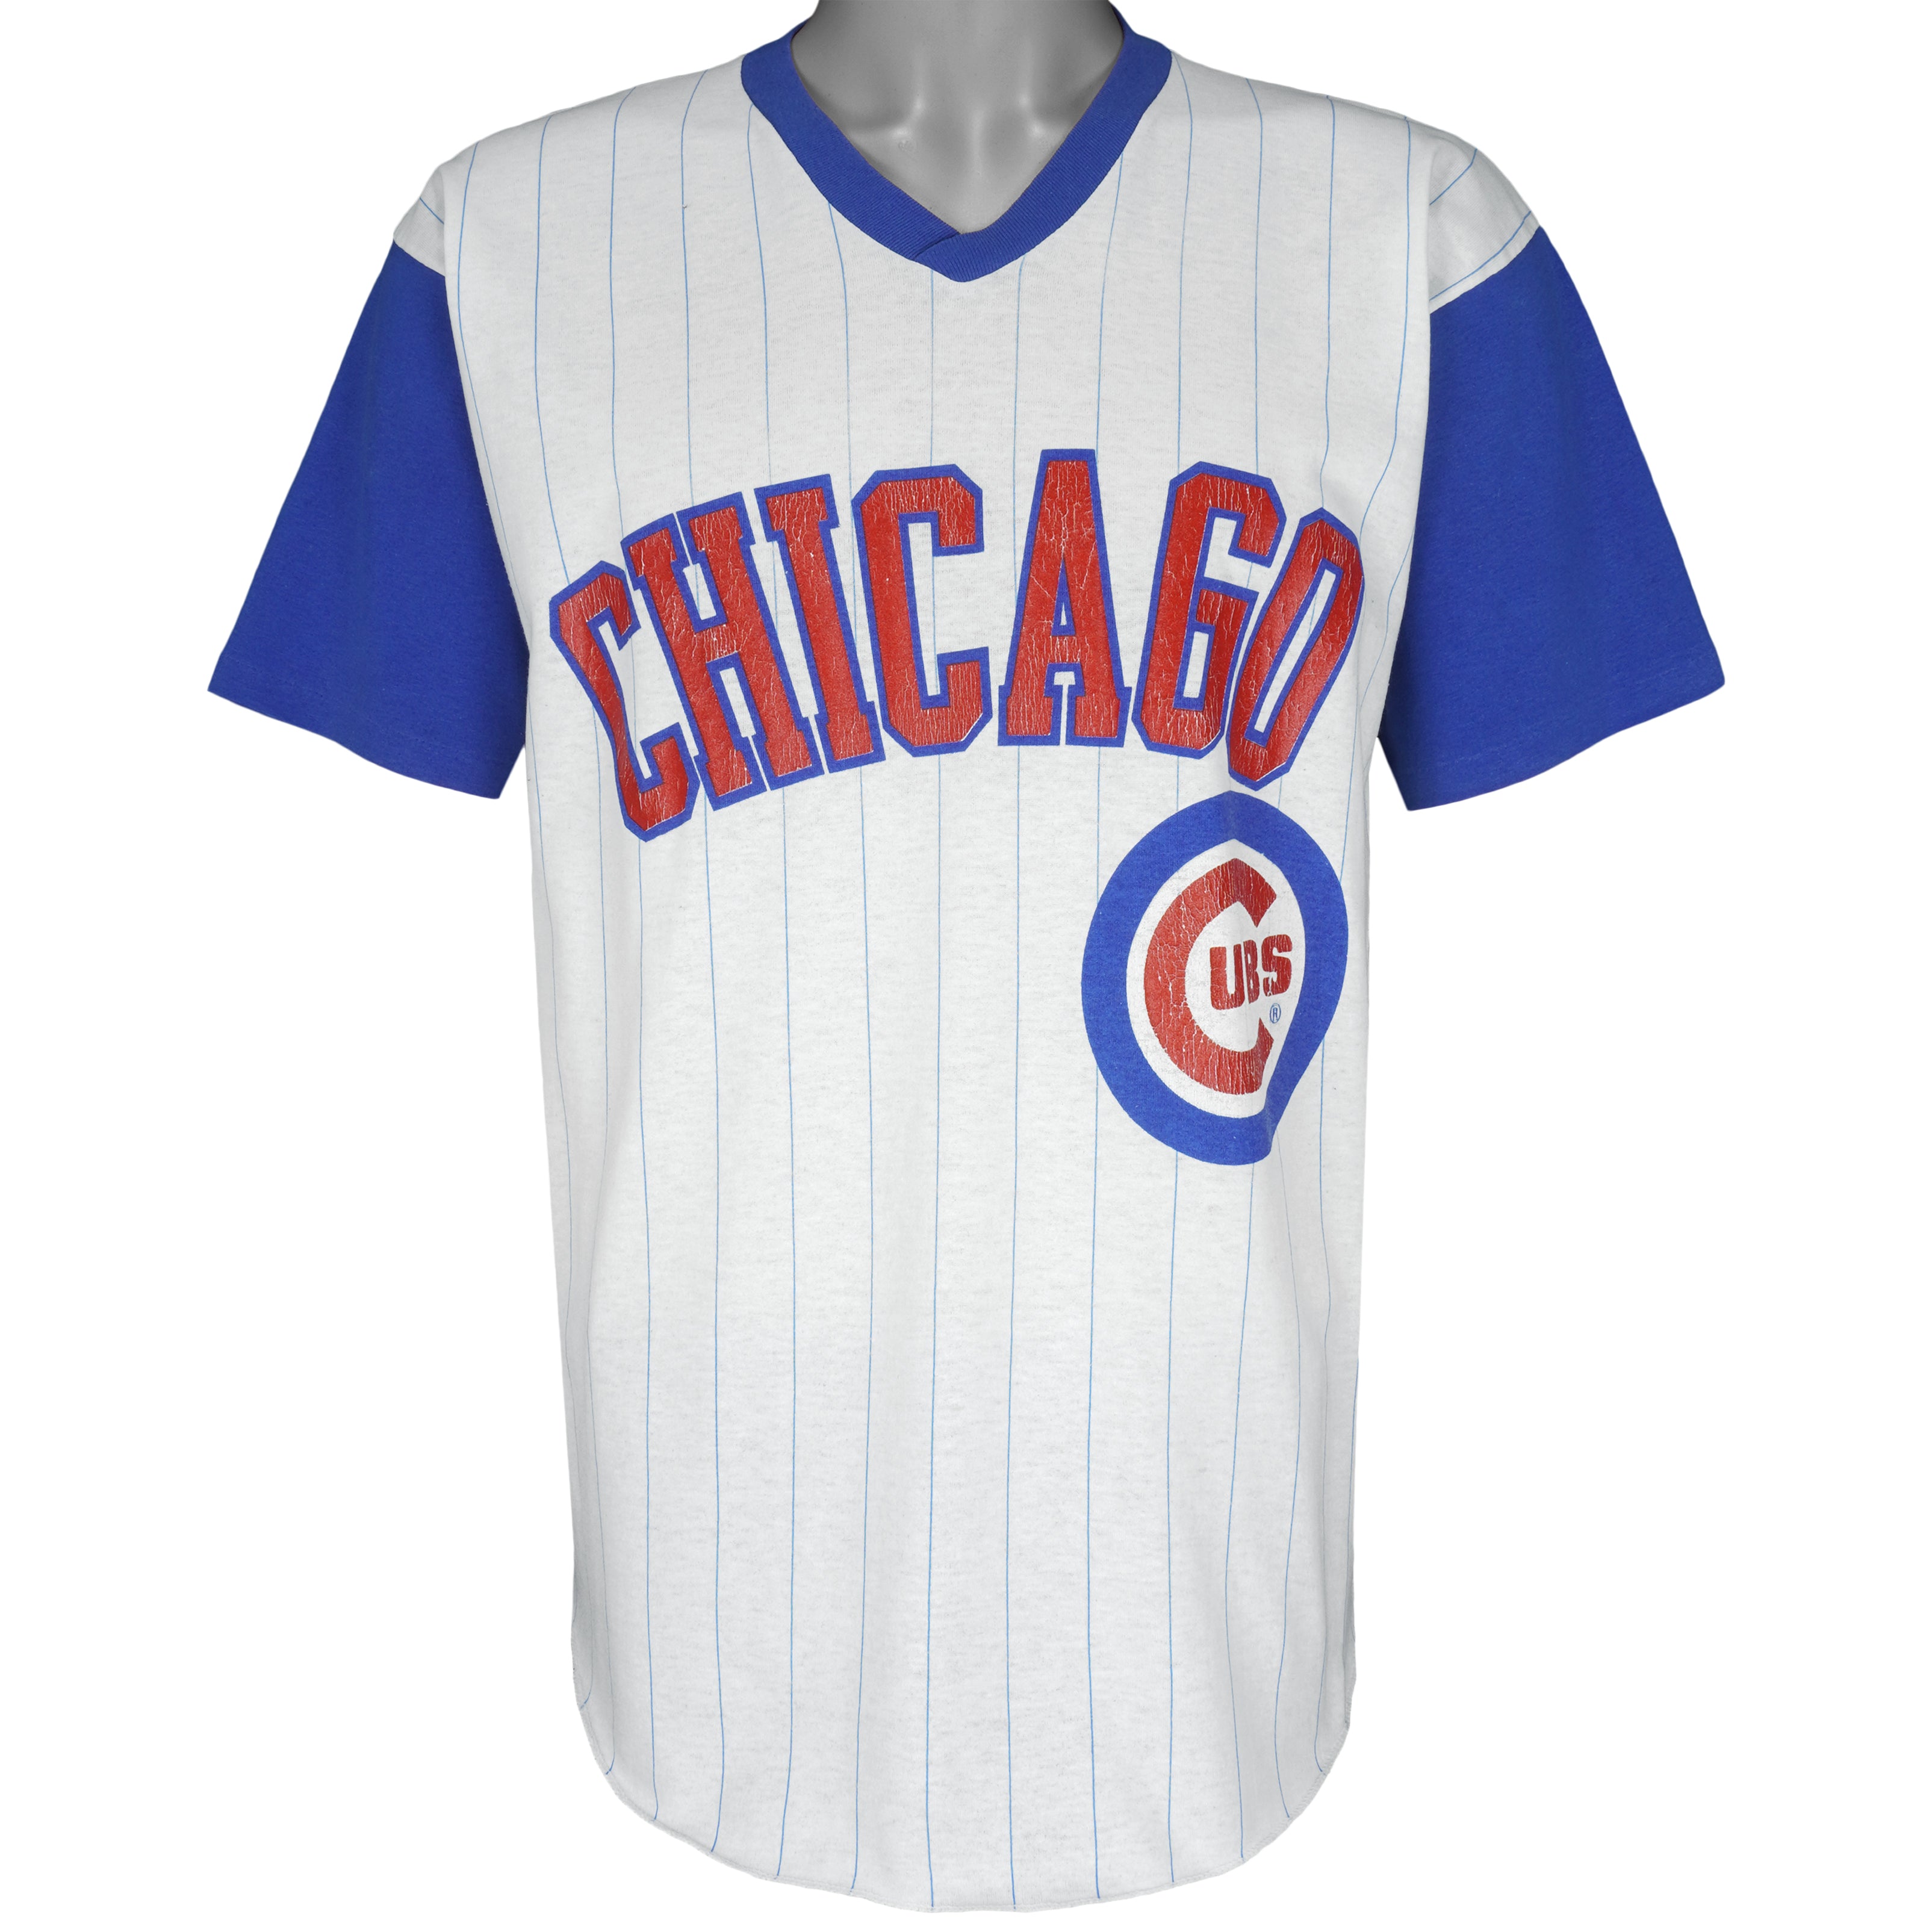 Vintage MLB - Chicago Cubs White & Blue Jersey T-Shirt 1990s Large